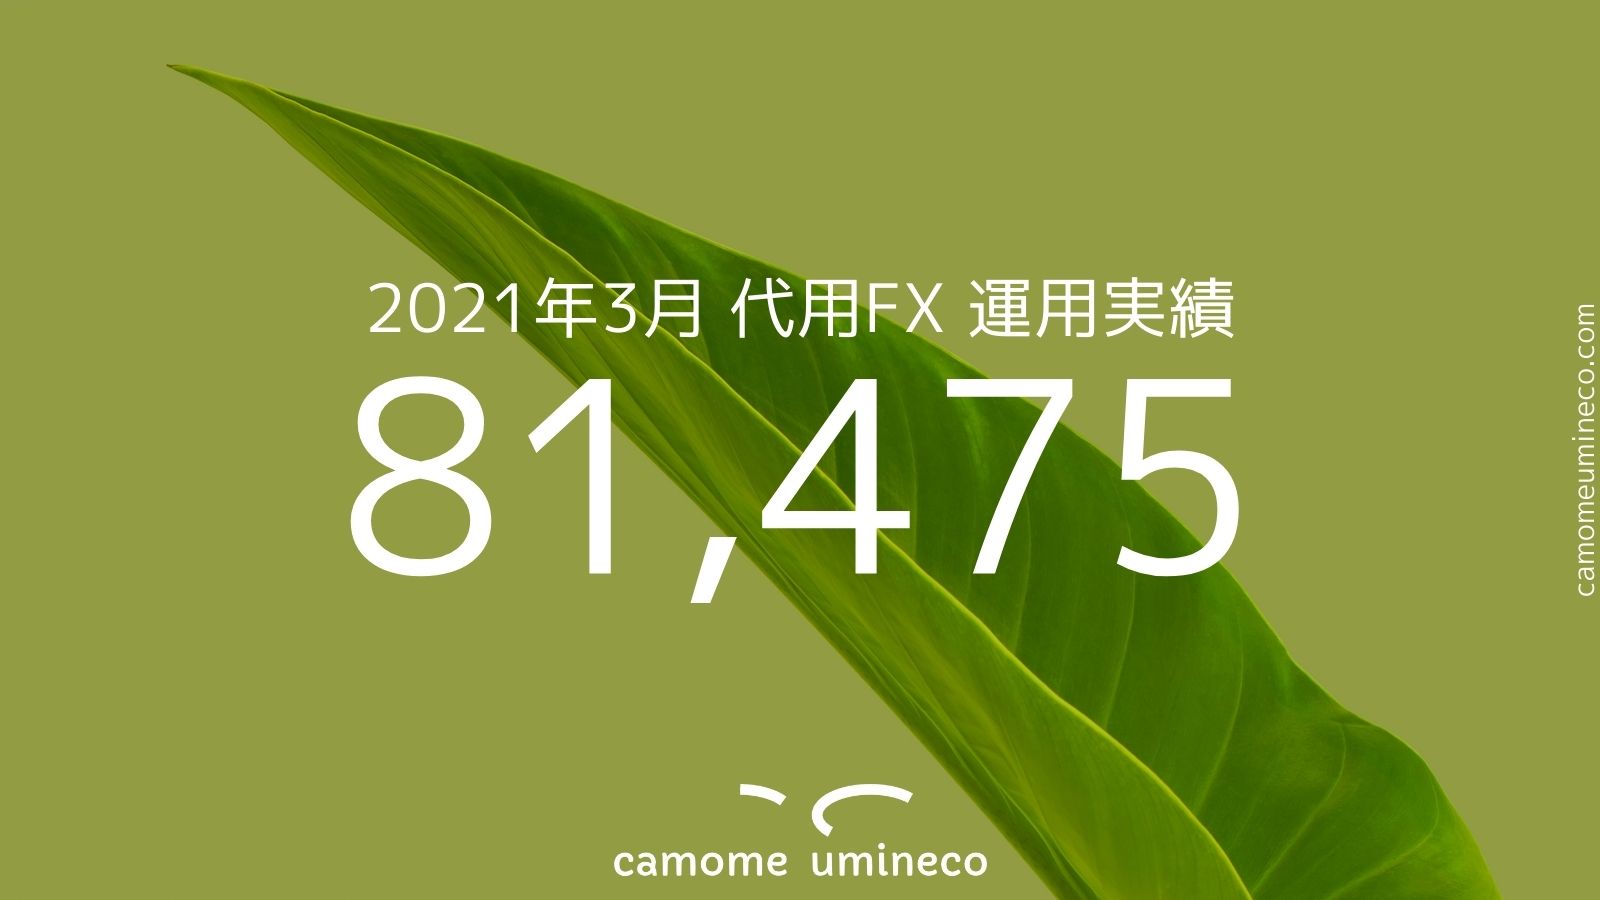 【auカブコム】2021年3月 代用FX 運用実績 81,475円